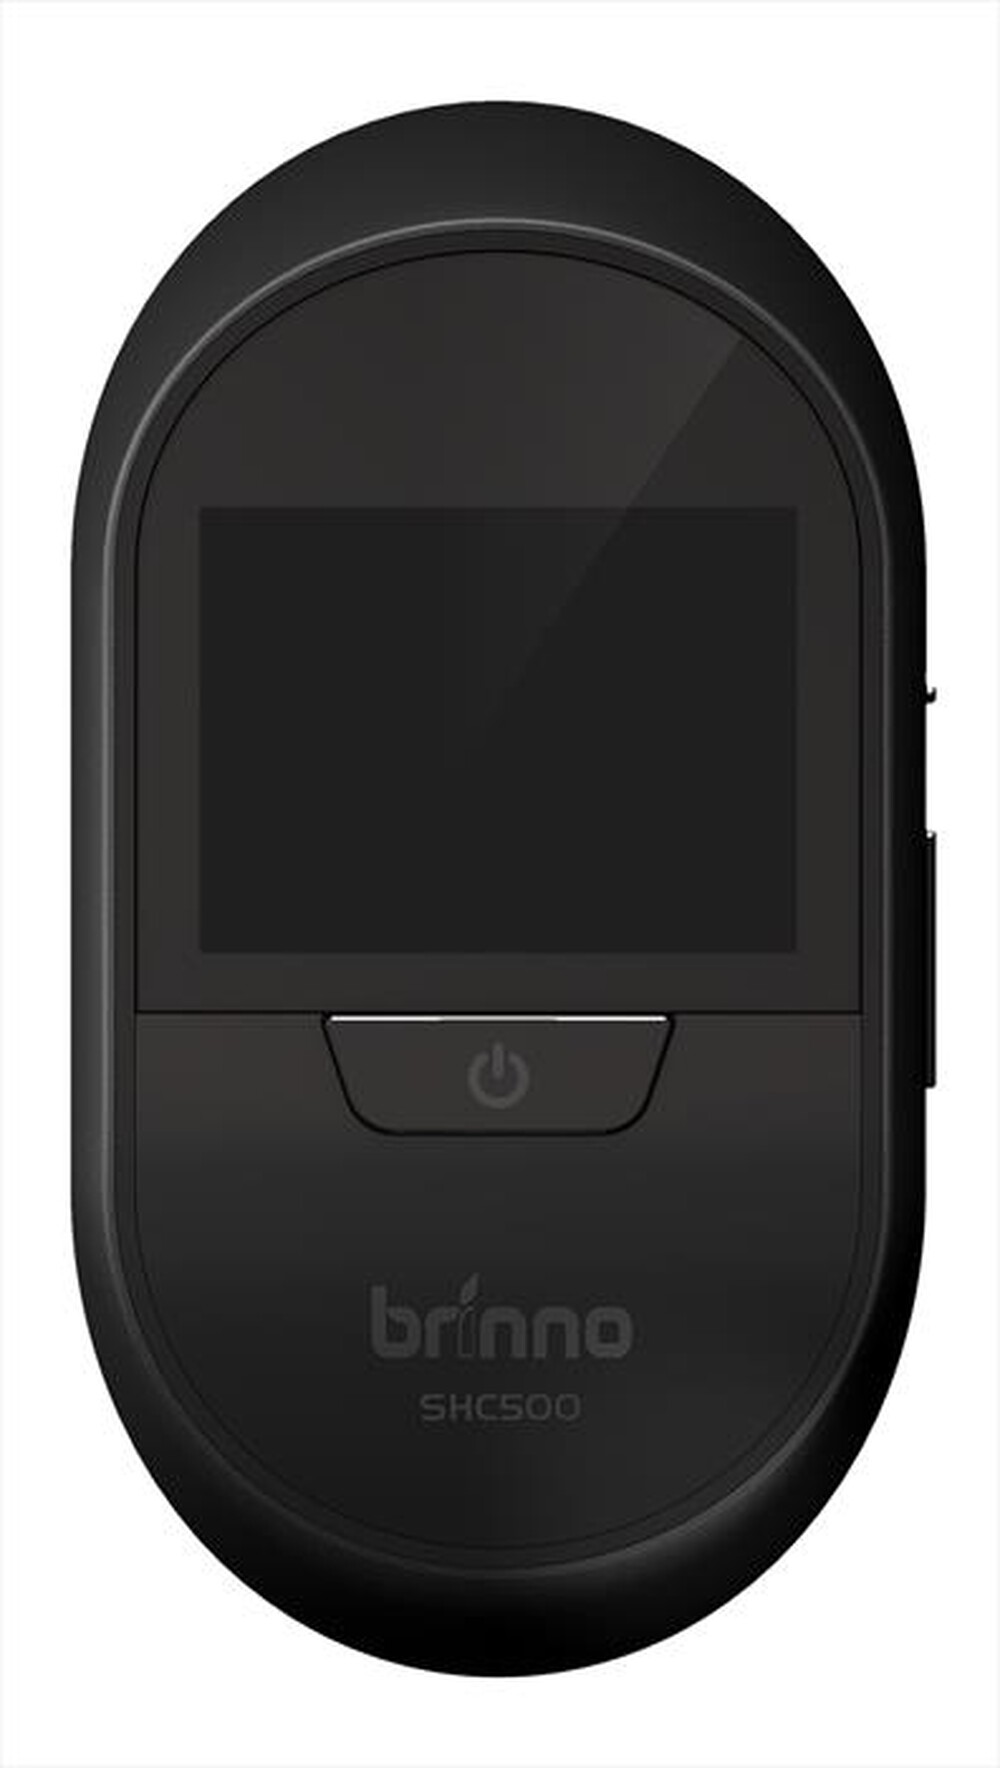 "BRINNO - SHC500 - Nero"